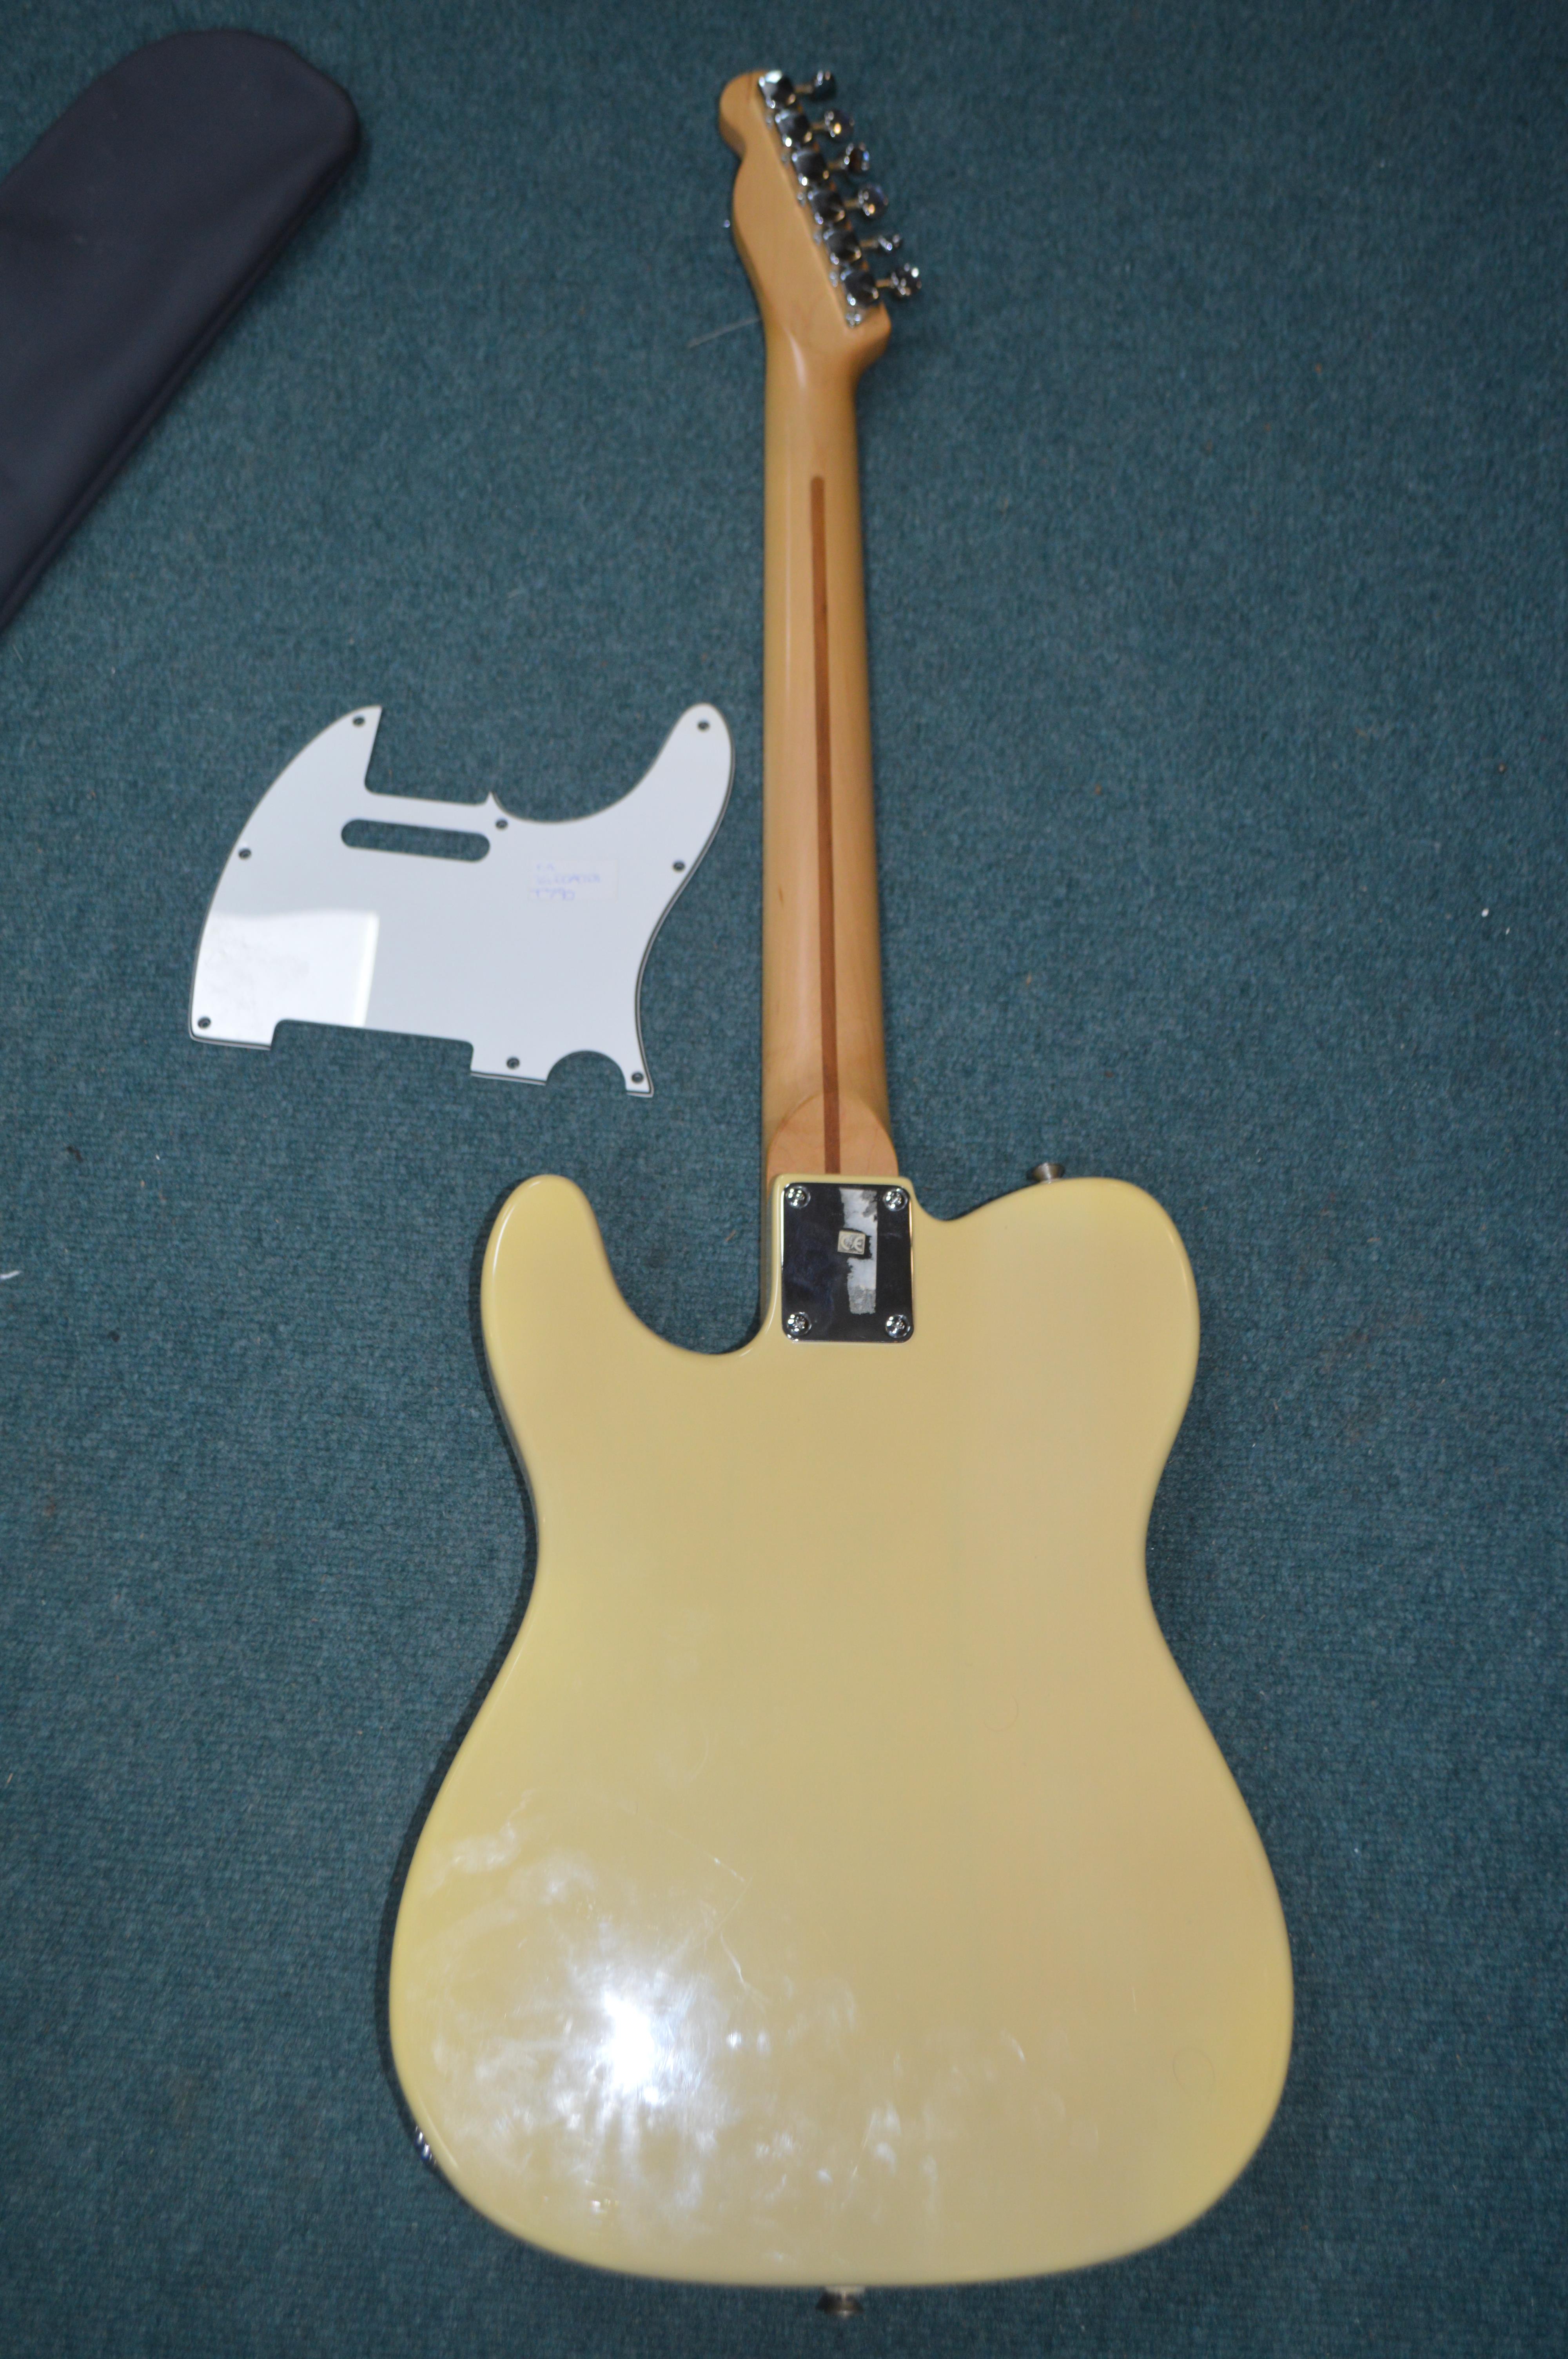 Fender Squier Telecaster Guitar Made in Korea - Image 4 of 4